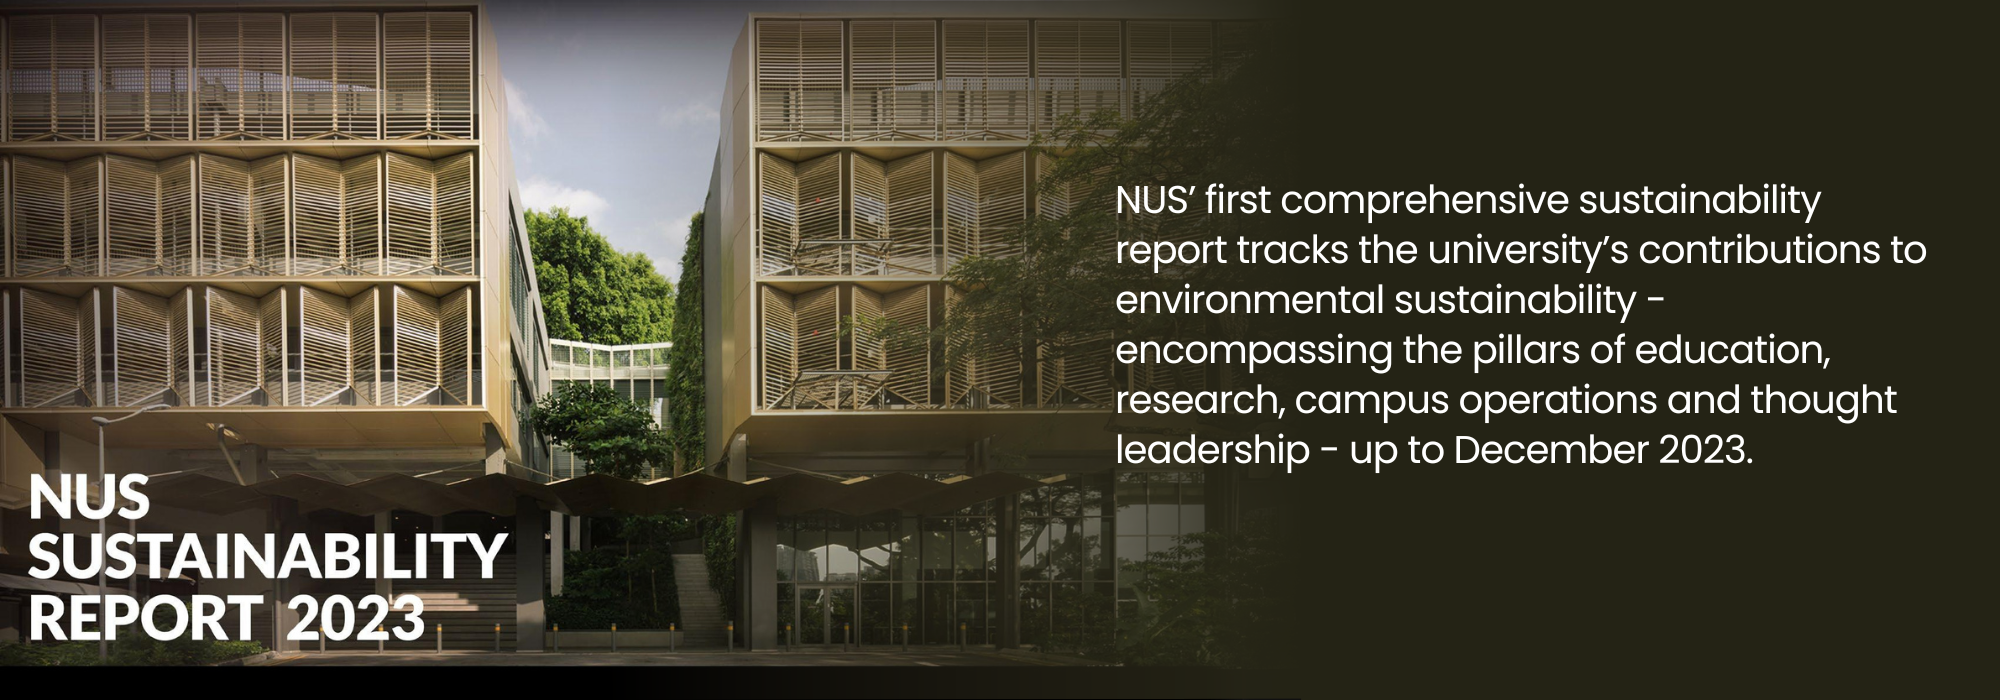 nus sustainability report e banner